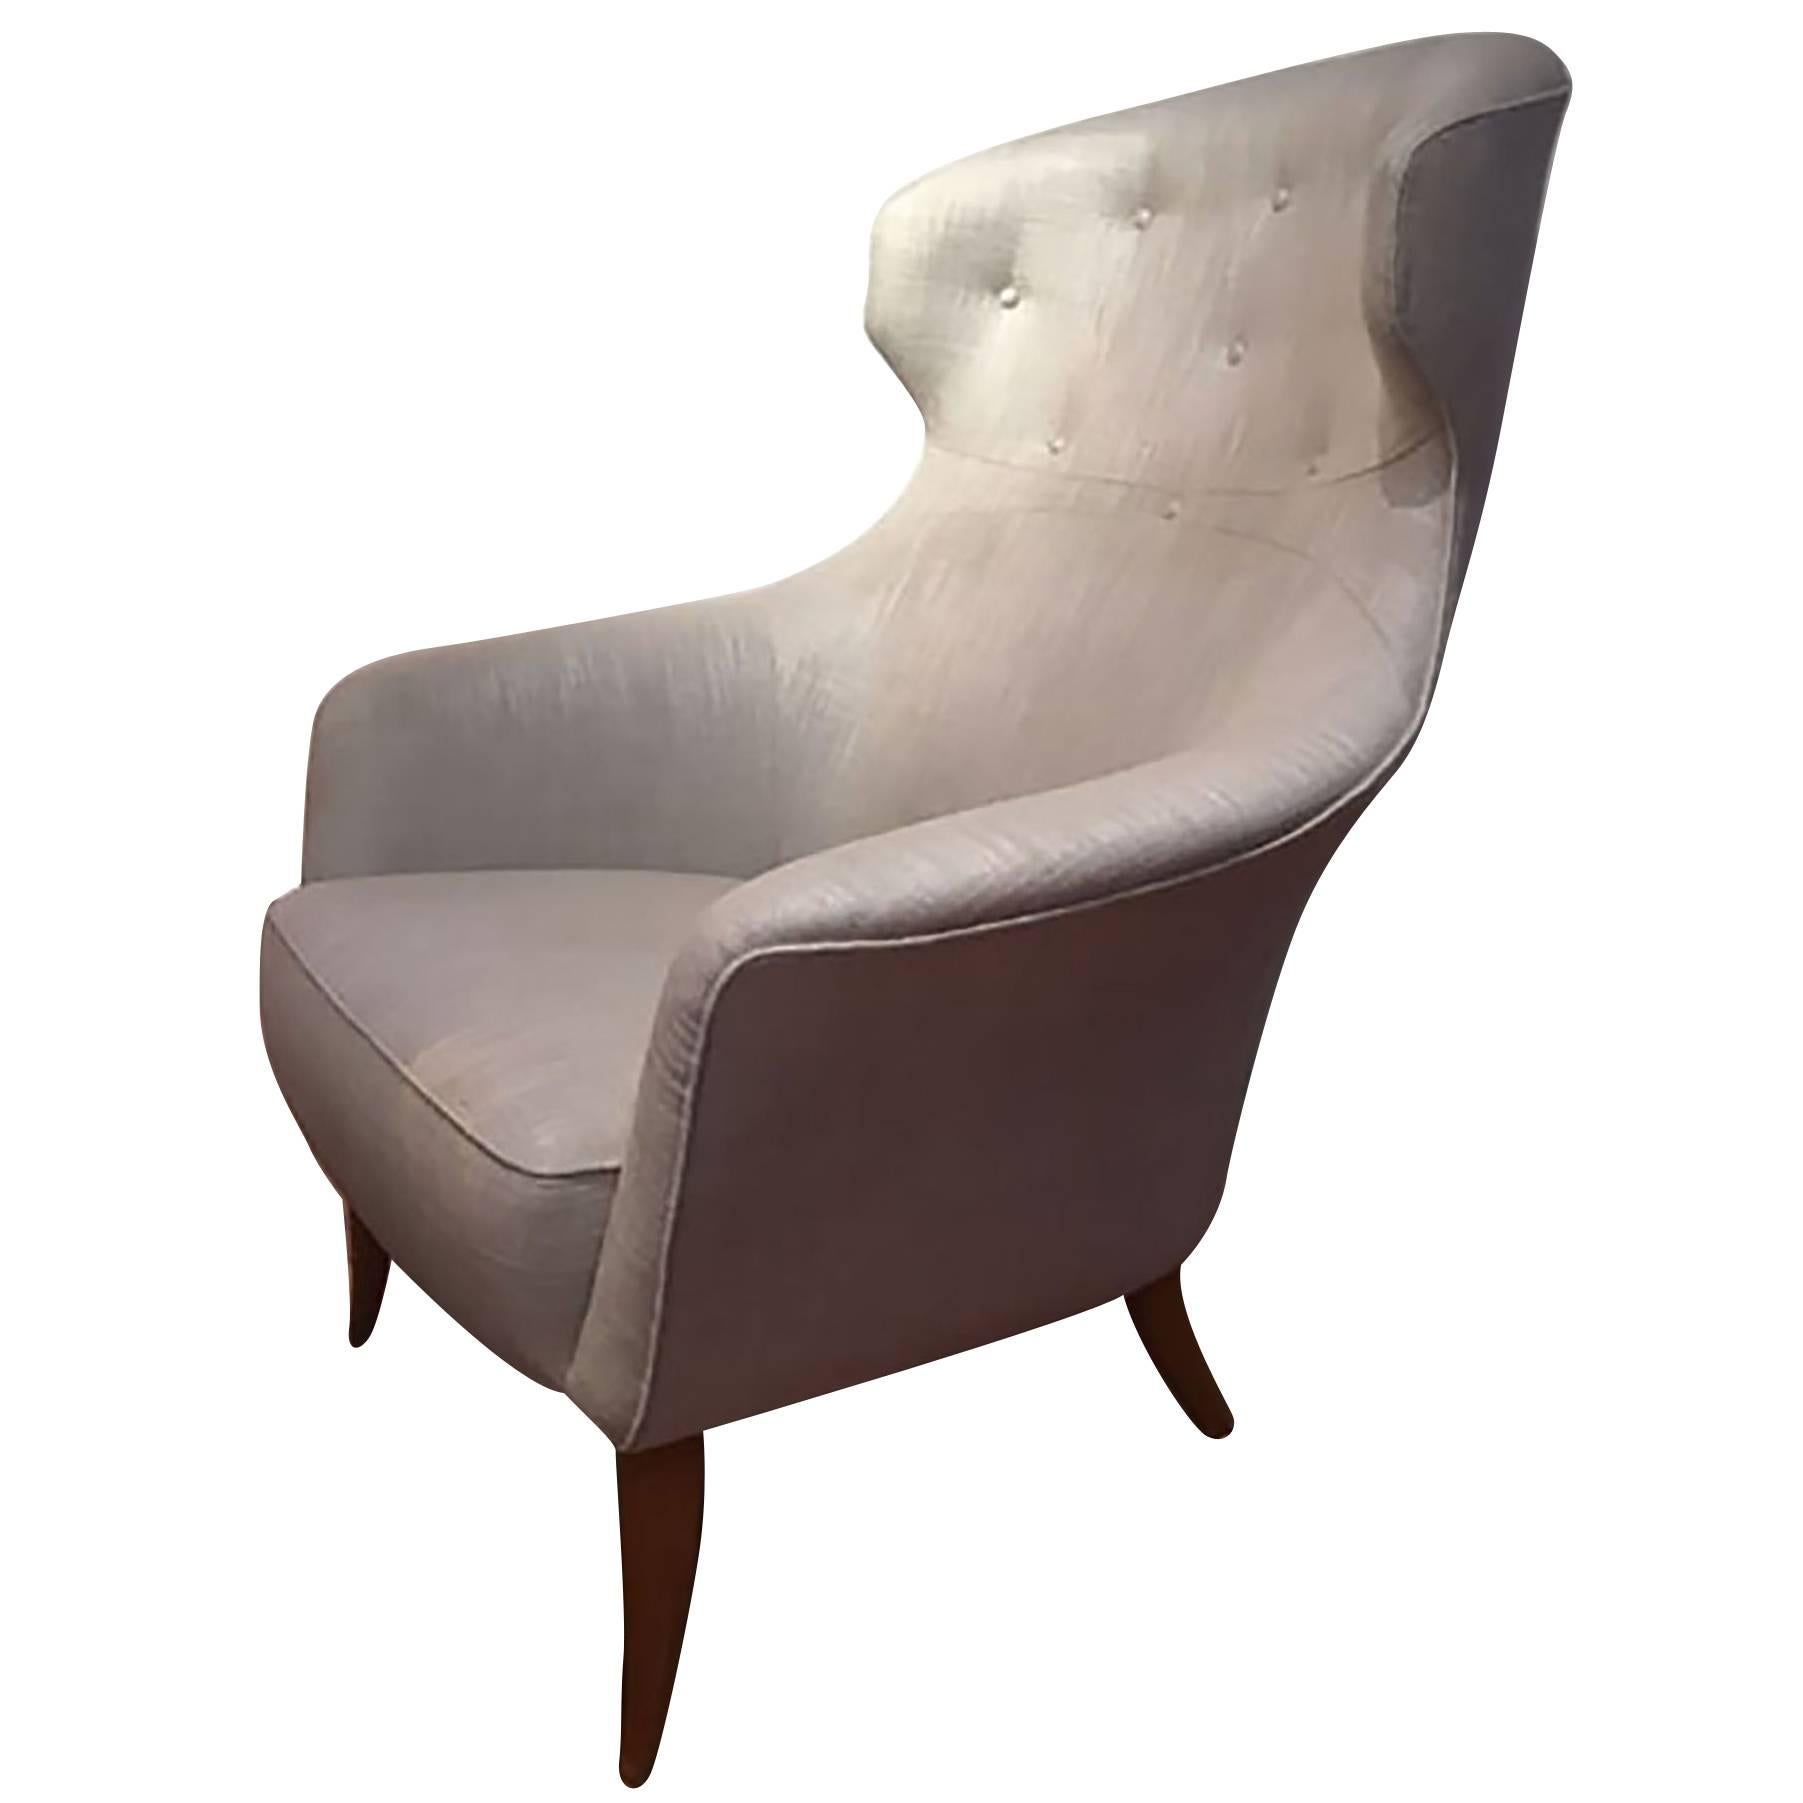 High back Lounge Chair by Kerstin Hörlin-Holmquist, ca. 1955